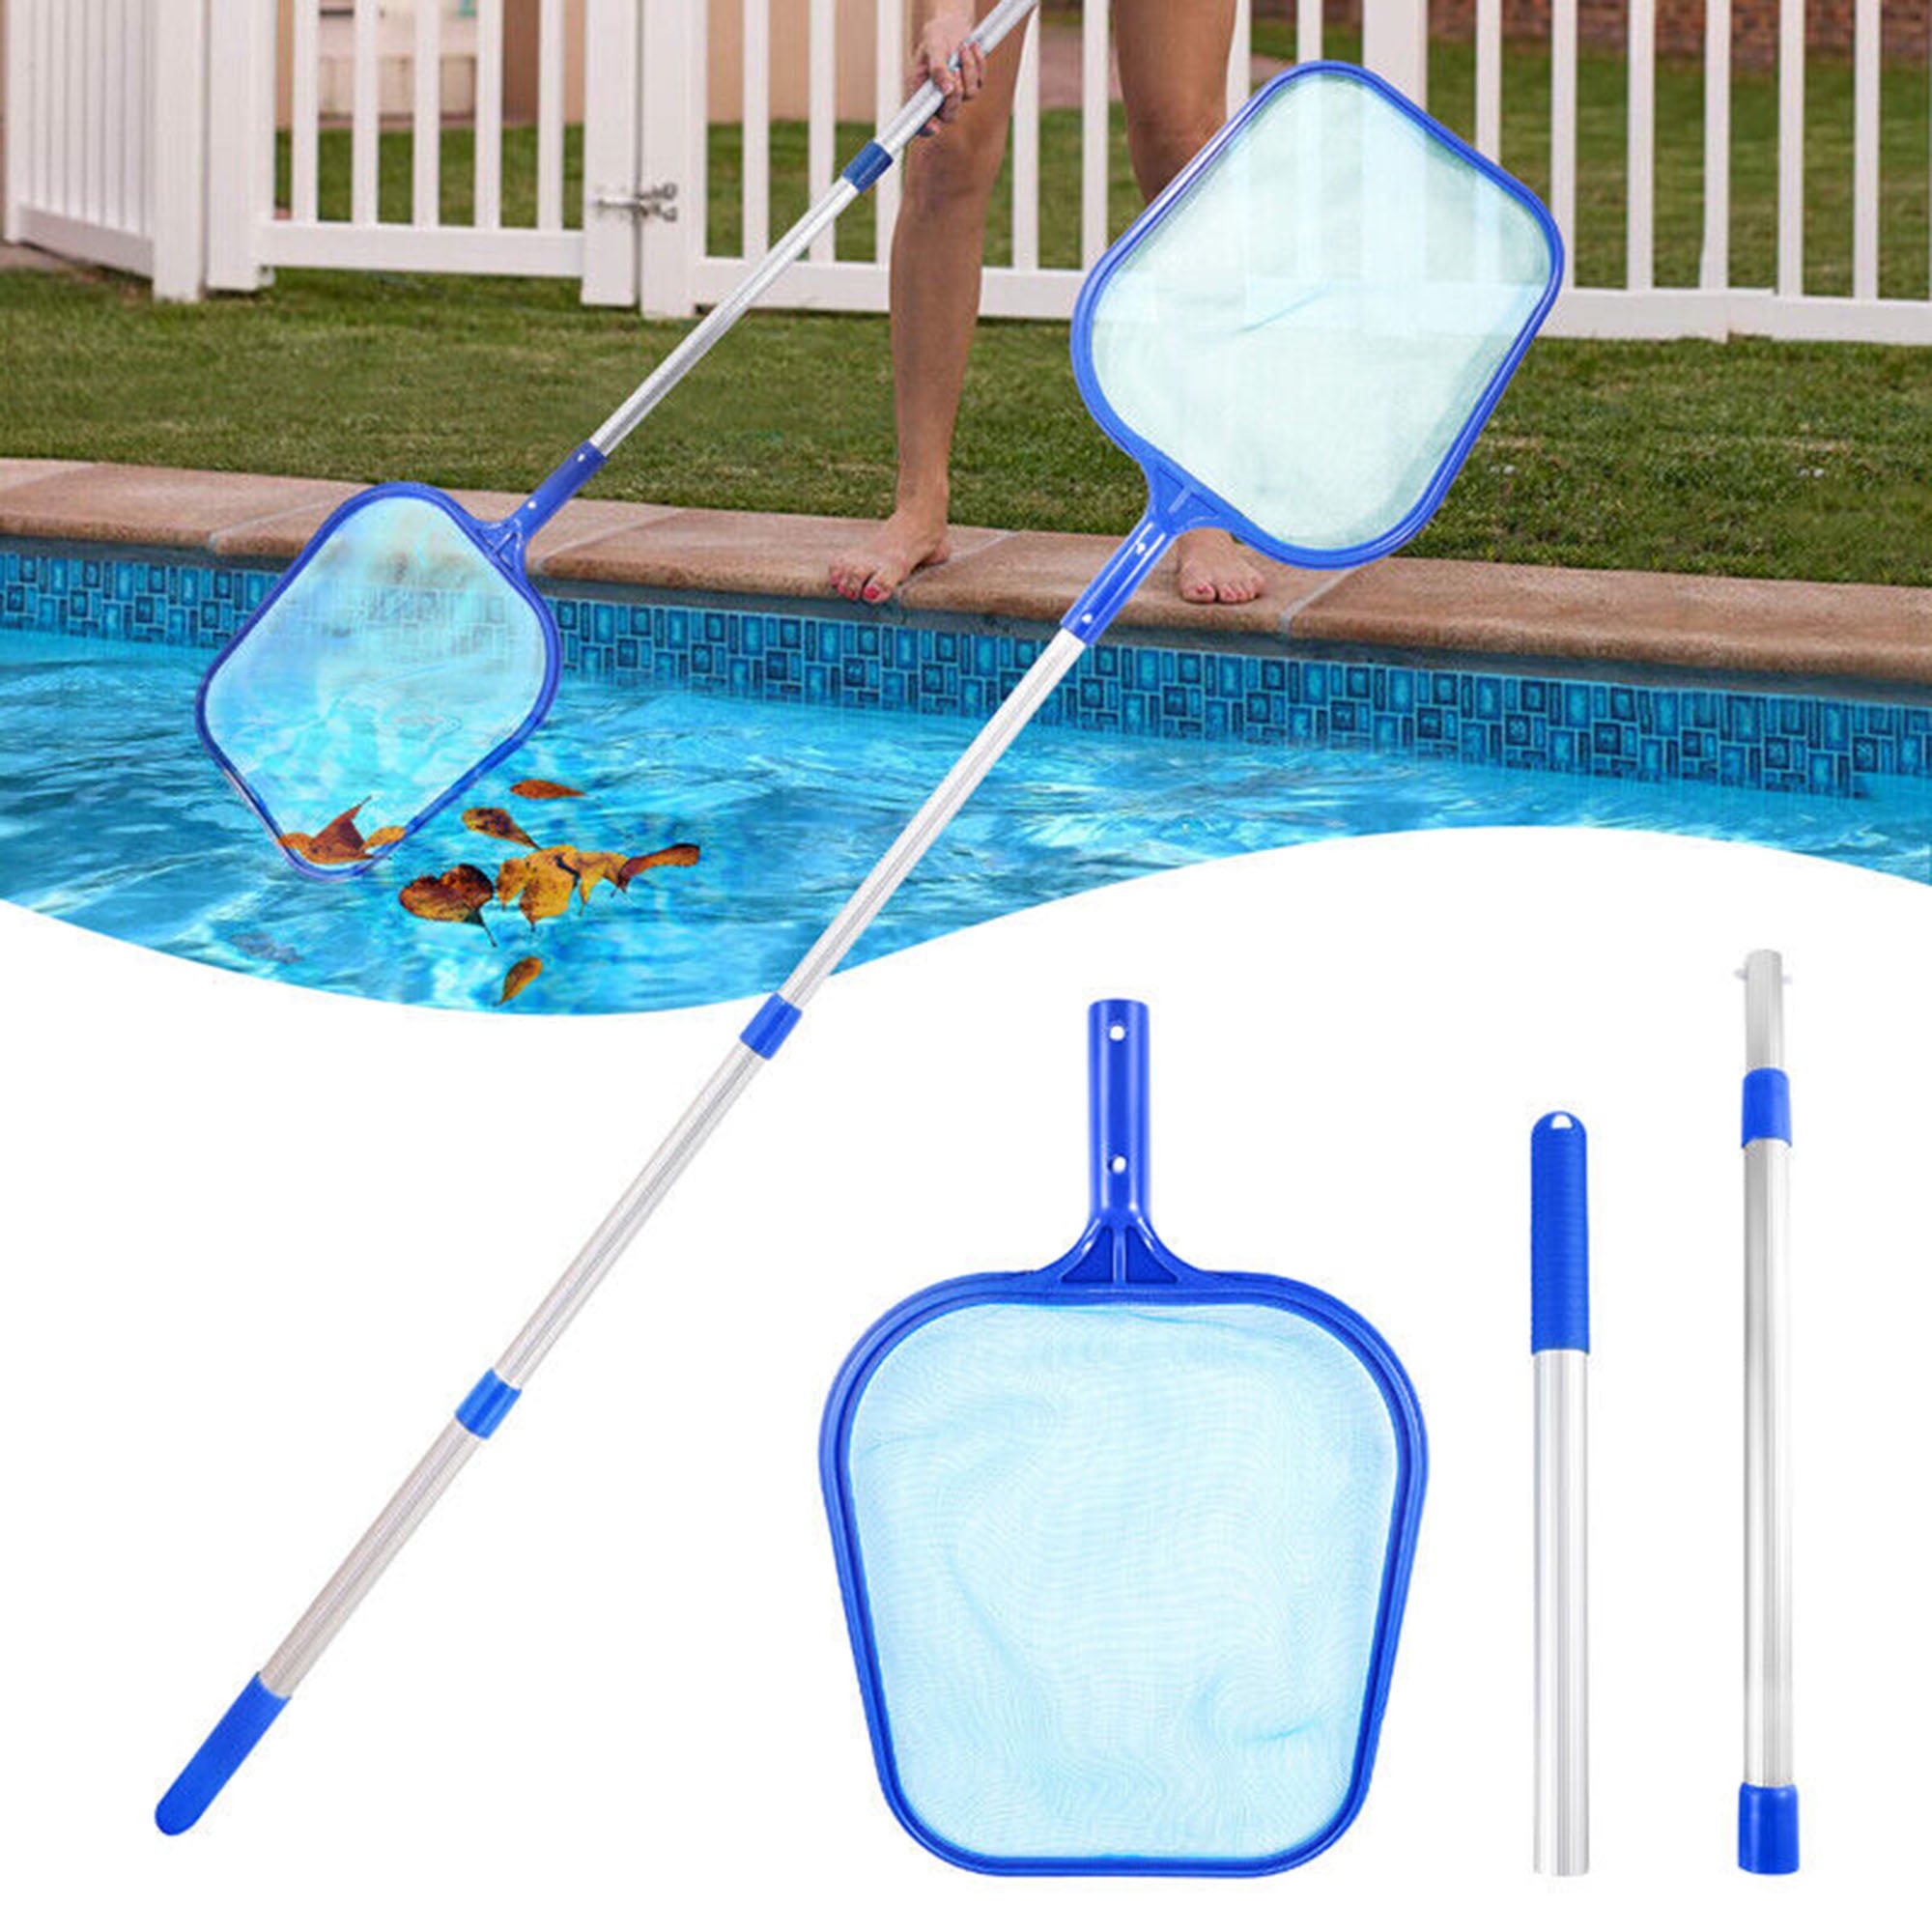 Vikakiooze Pool Skimmer Net for Cleaning, Heavy Duty Pool Leaf